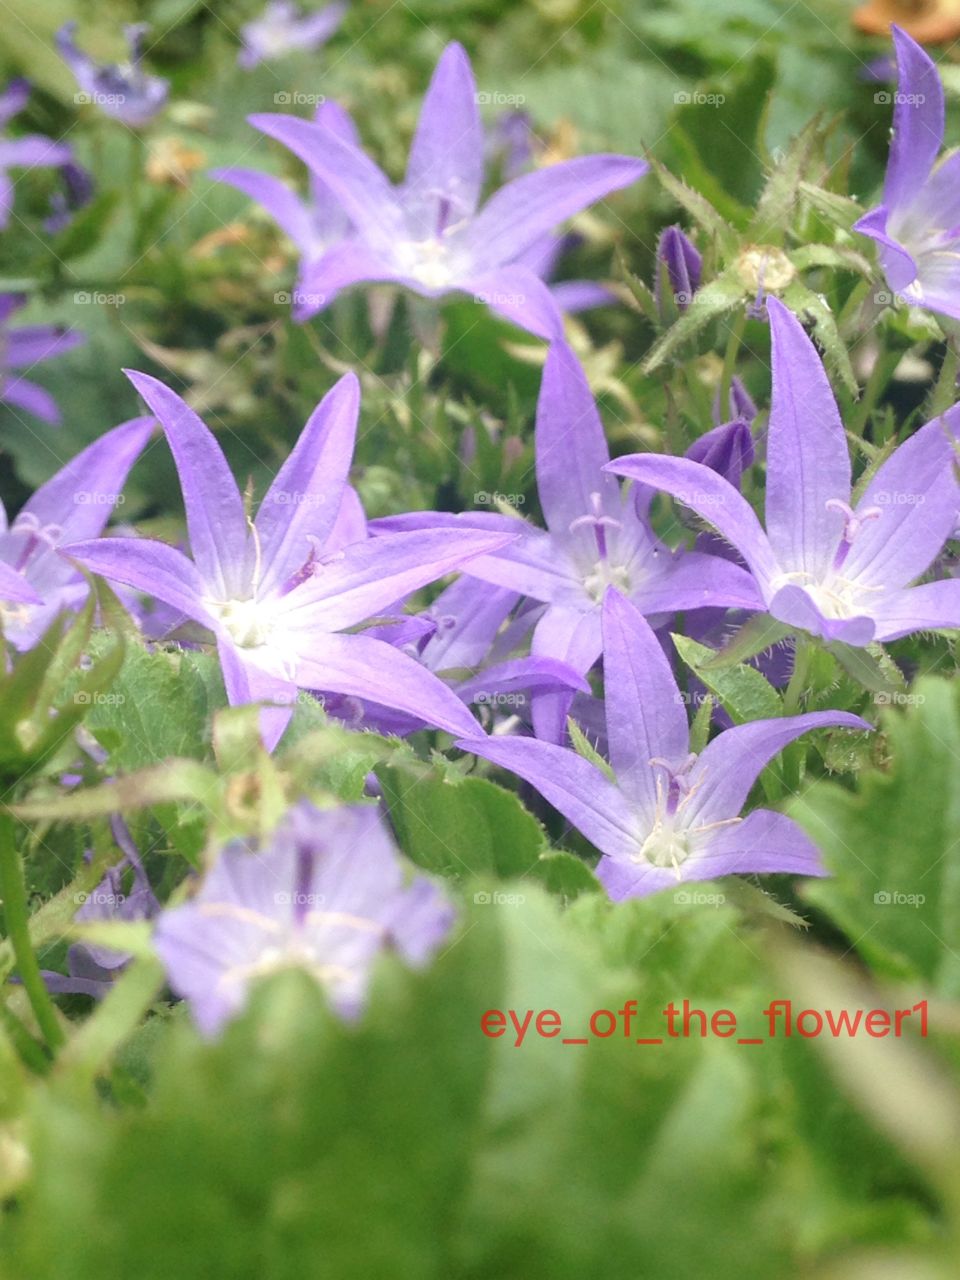 Blue star flowers 